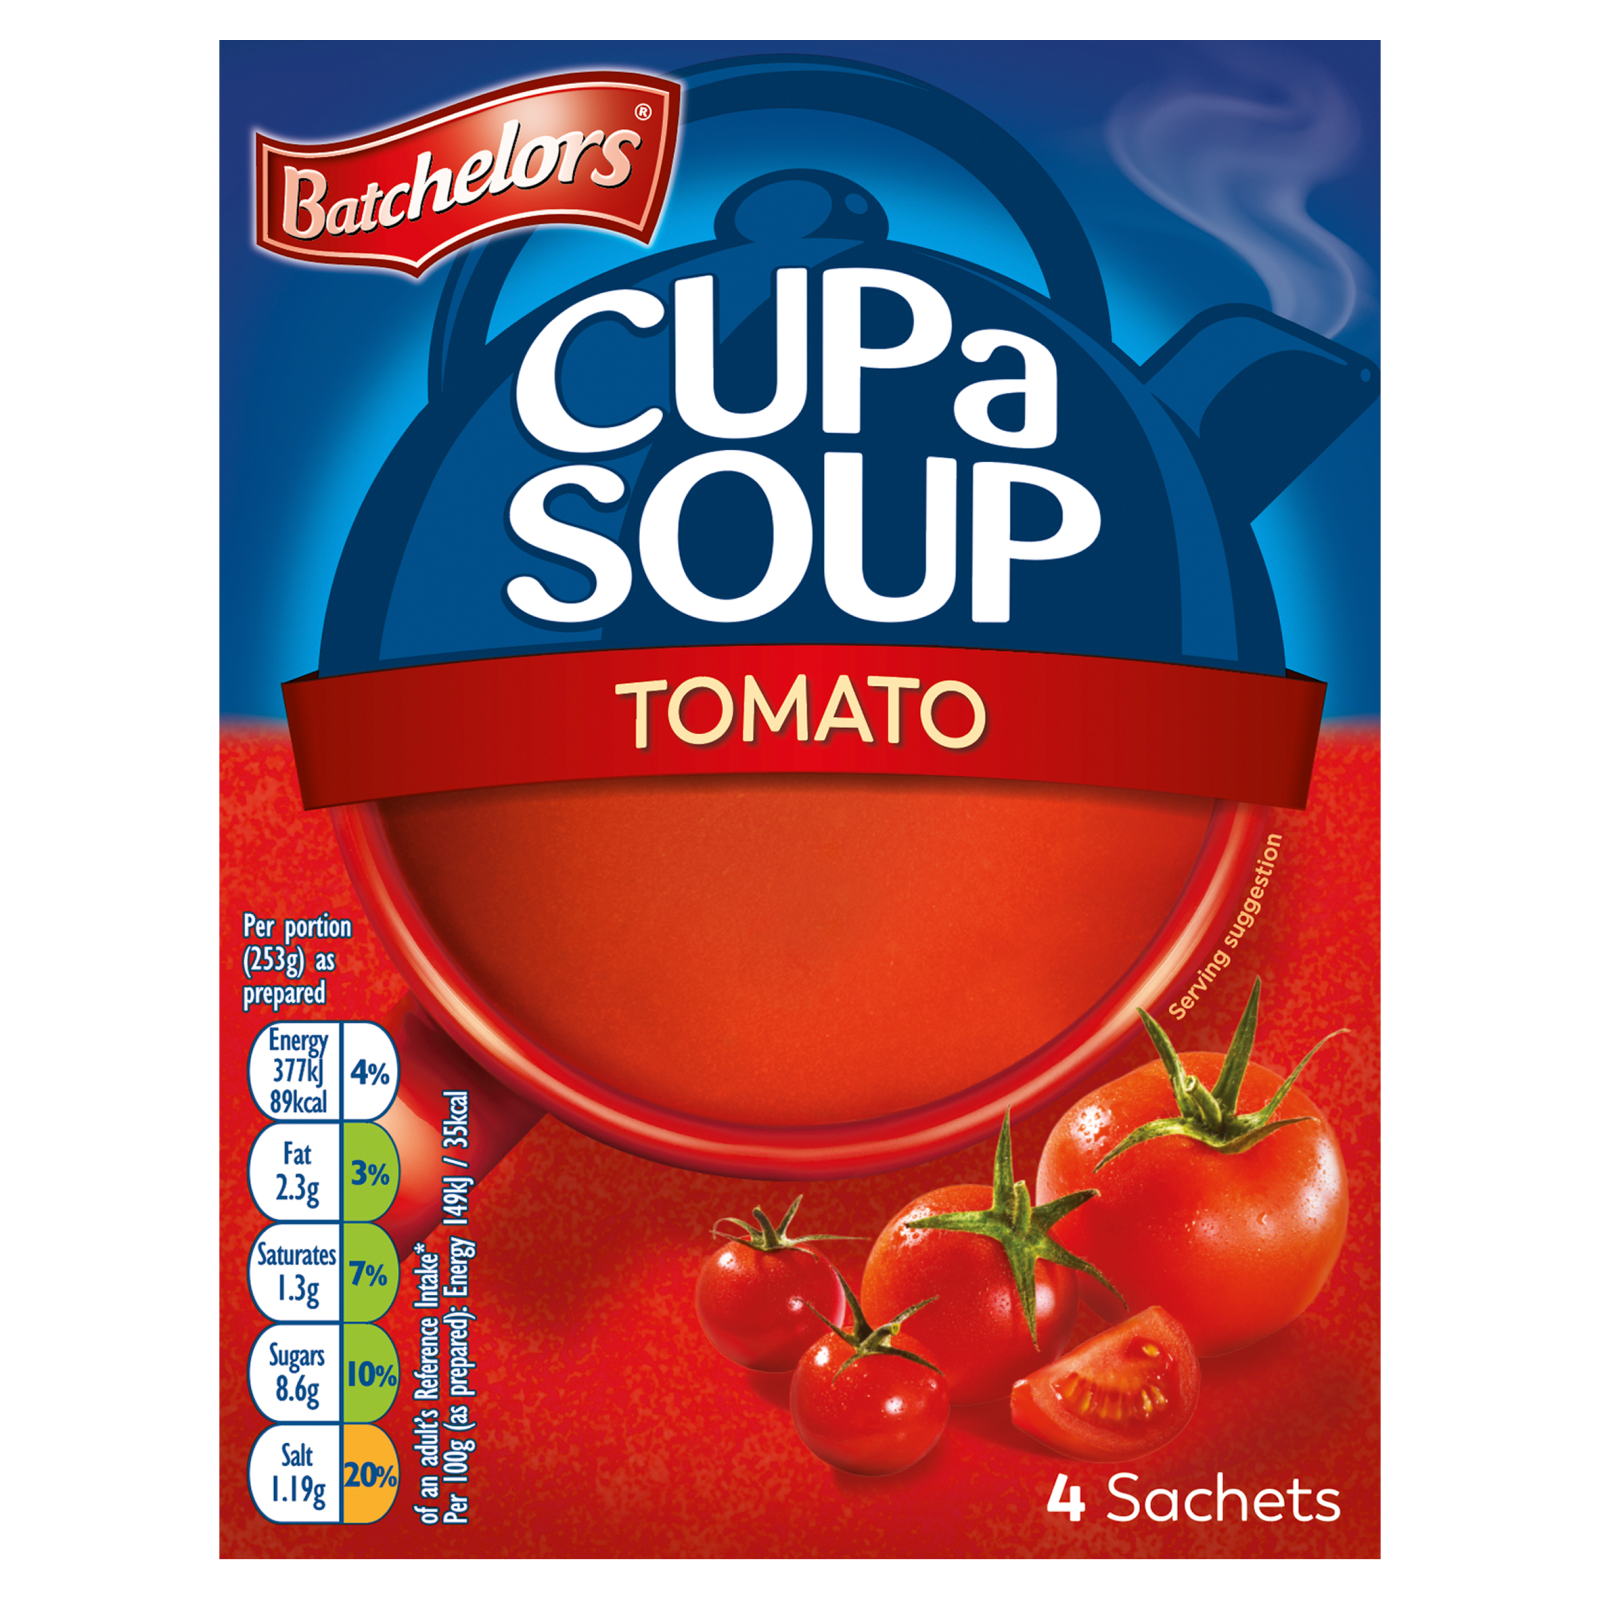 Batchelors Cup a Soup Tomato 4 Sachets, 93g